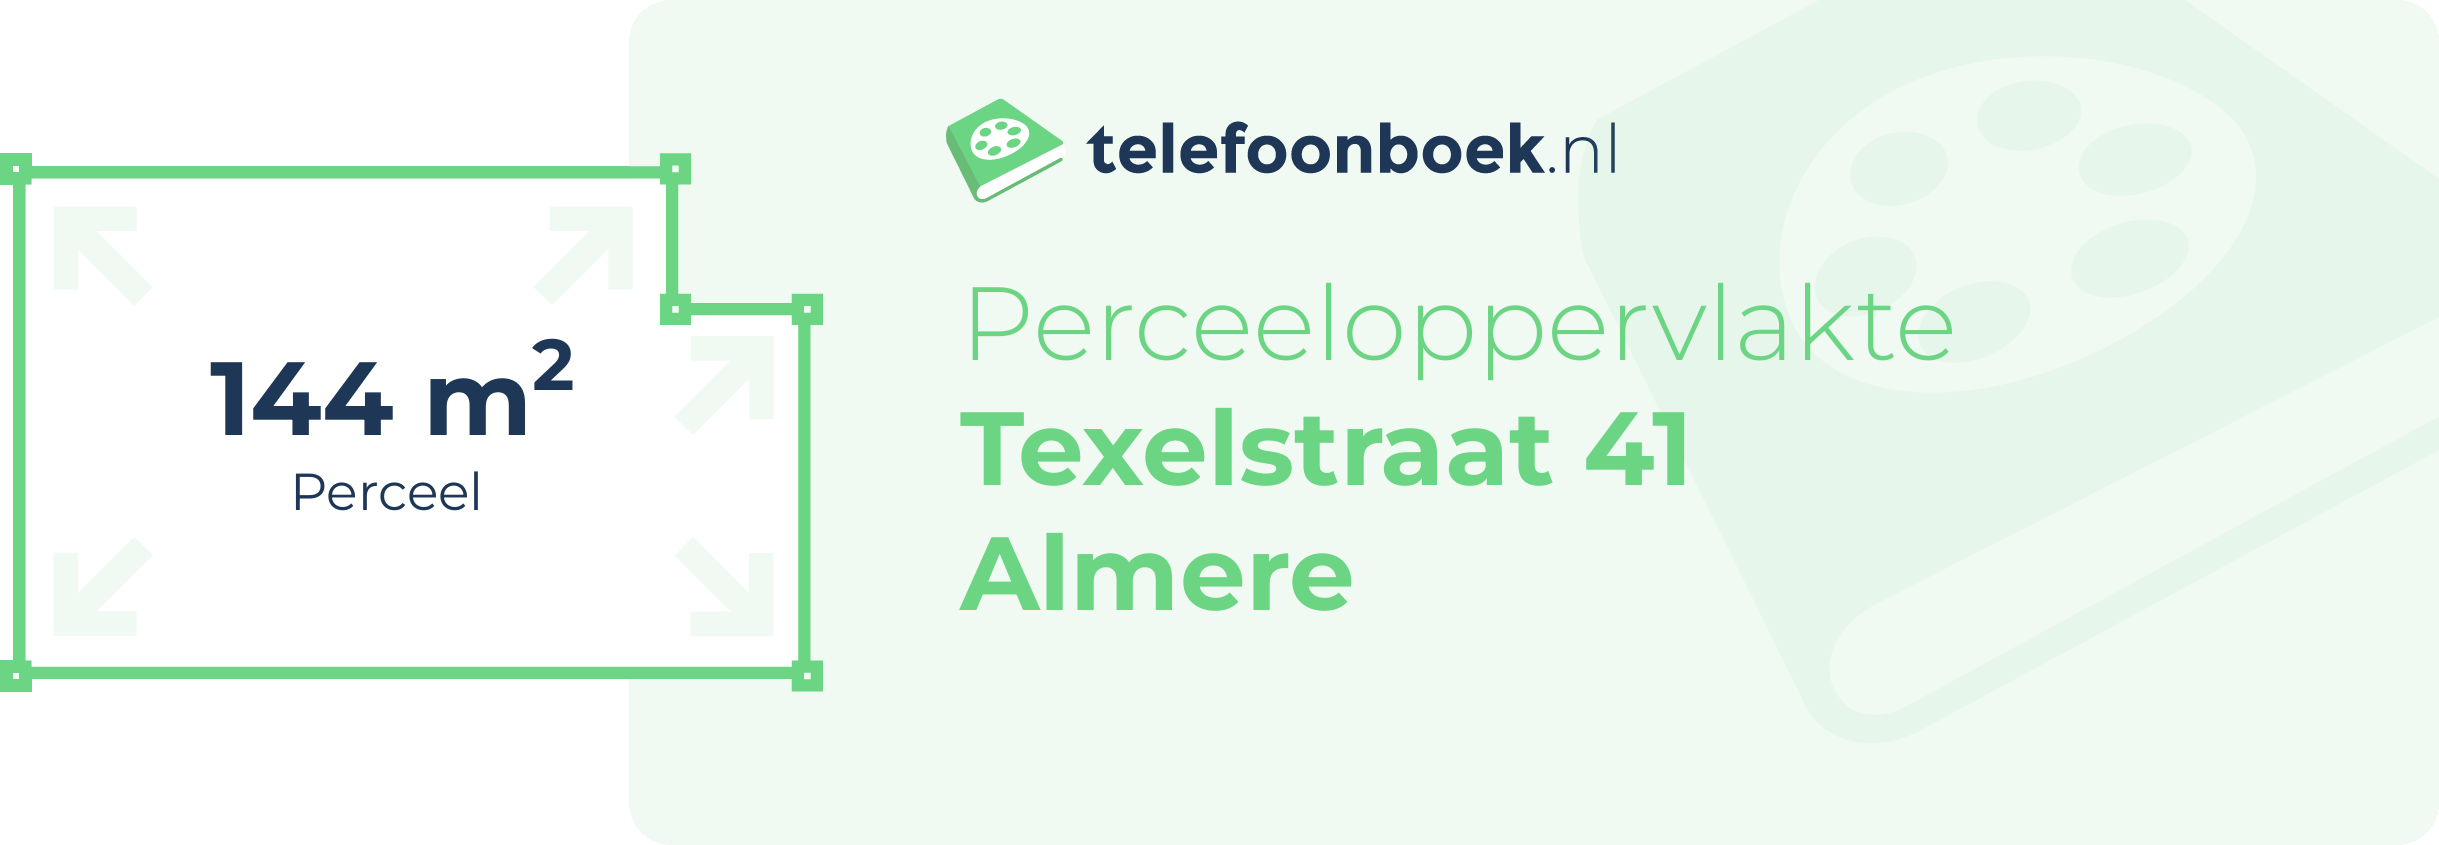 Perceeloppervlakte Texelstraat 41 Almere